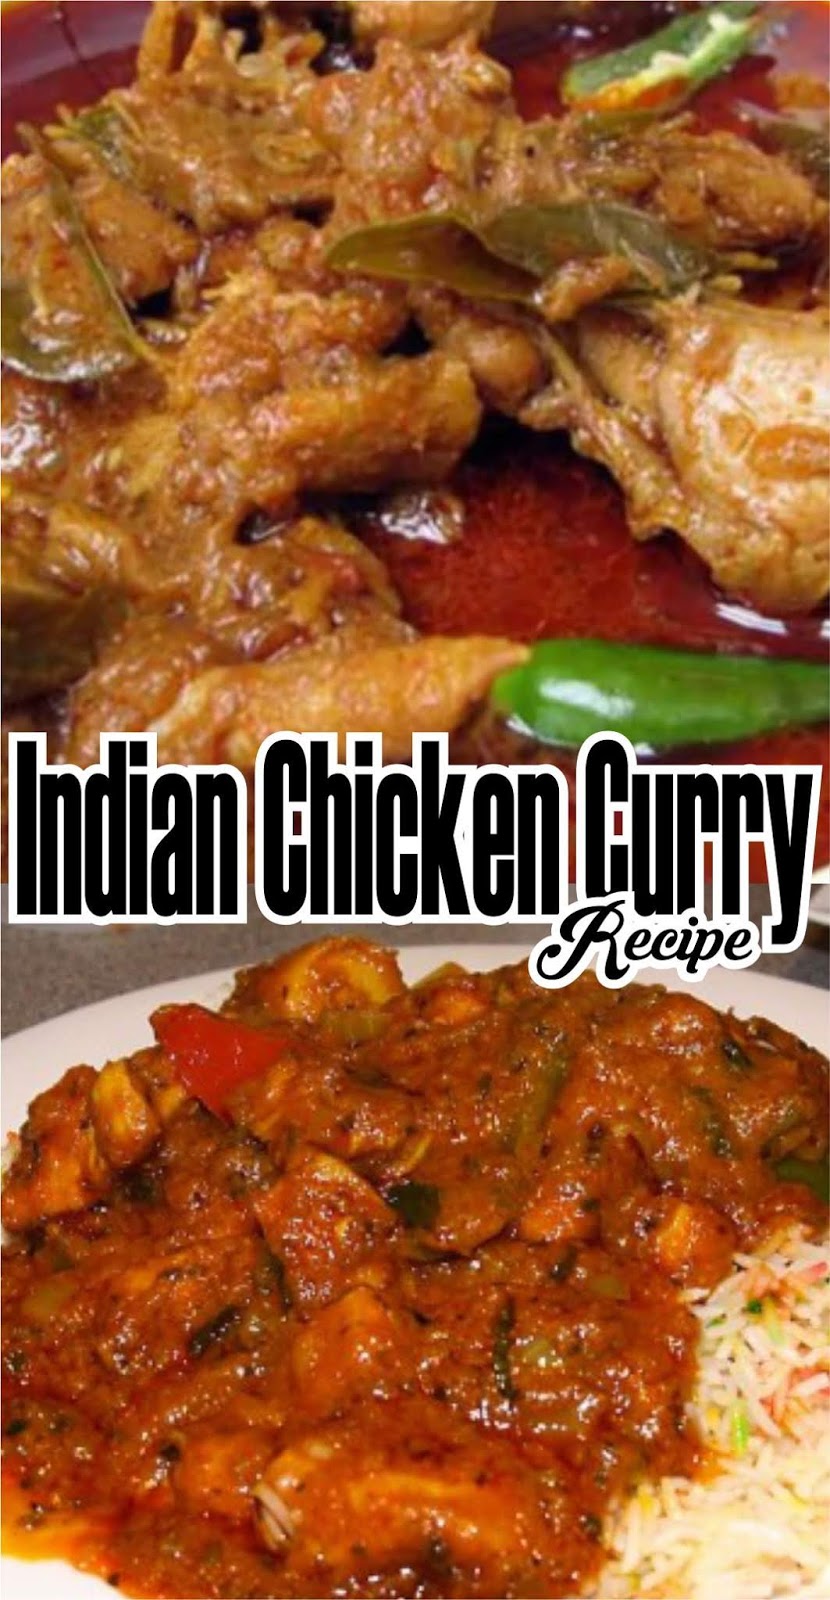 Indian Chicken Curry Recipe - Easy Kraft Recipes - angrygeorgian